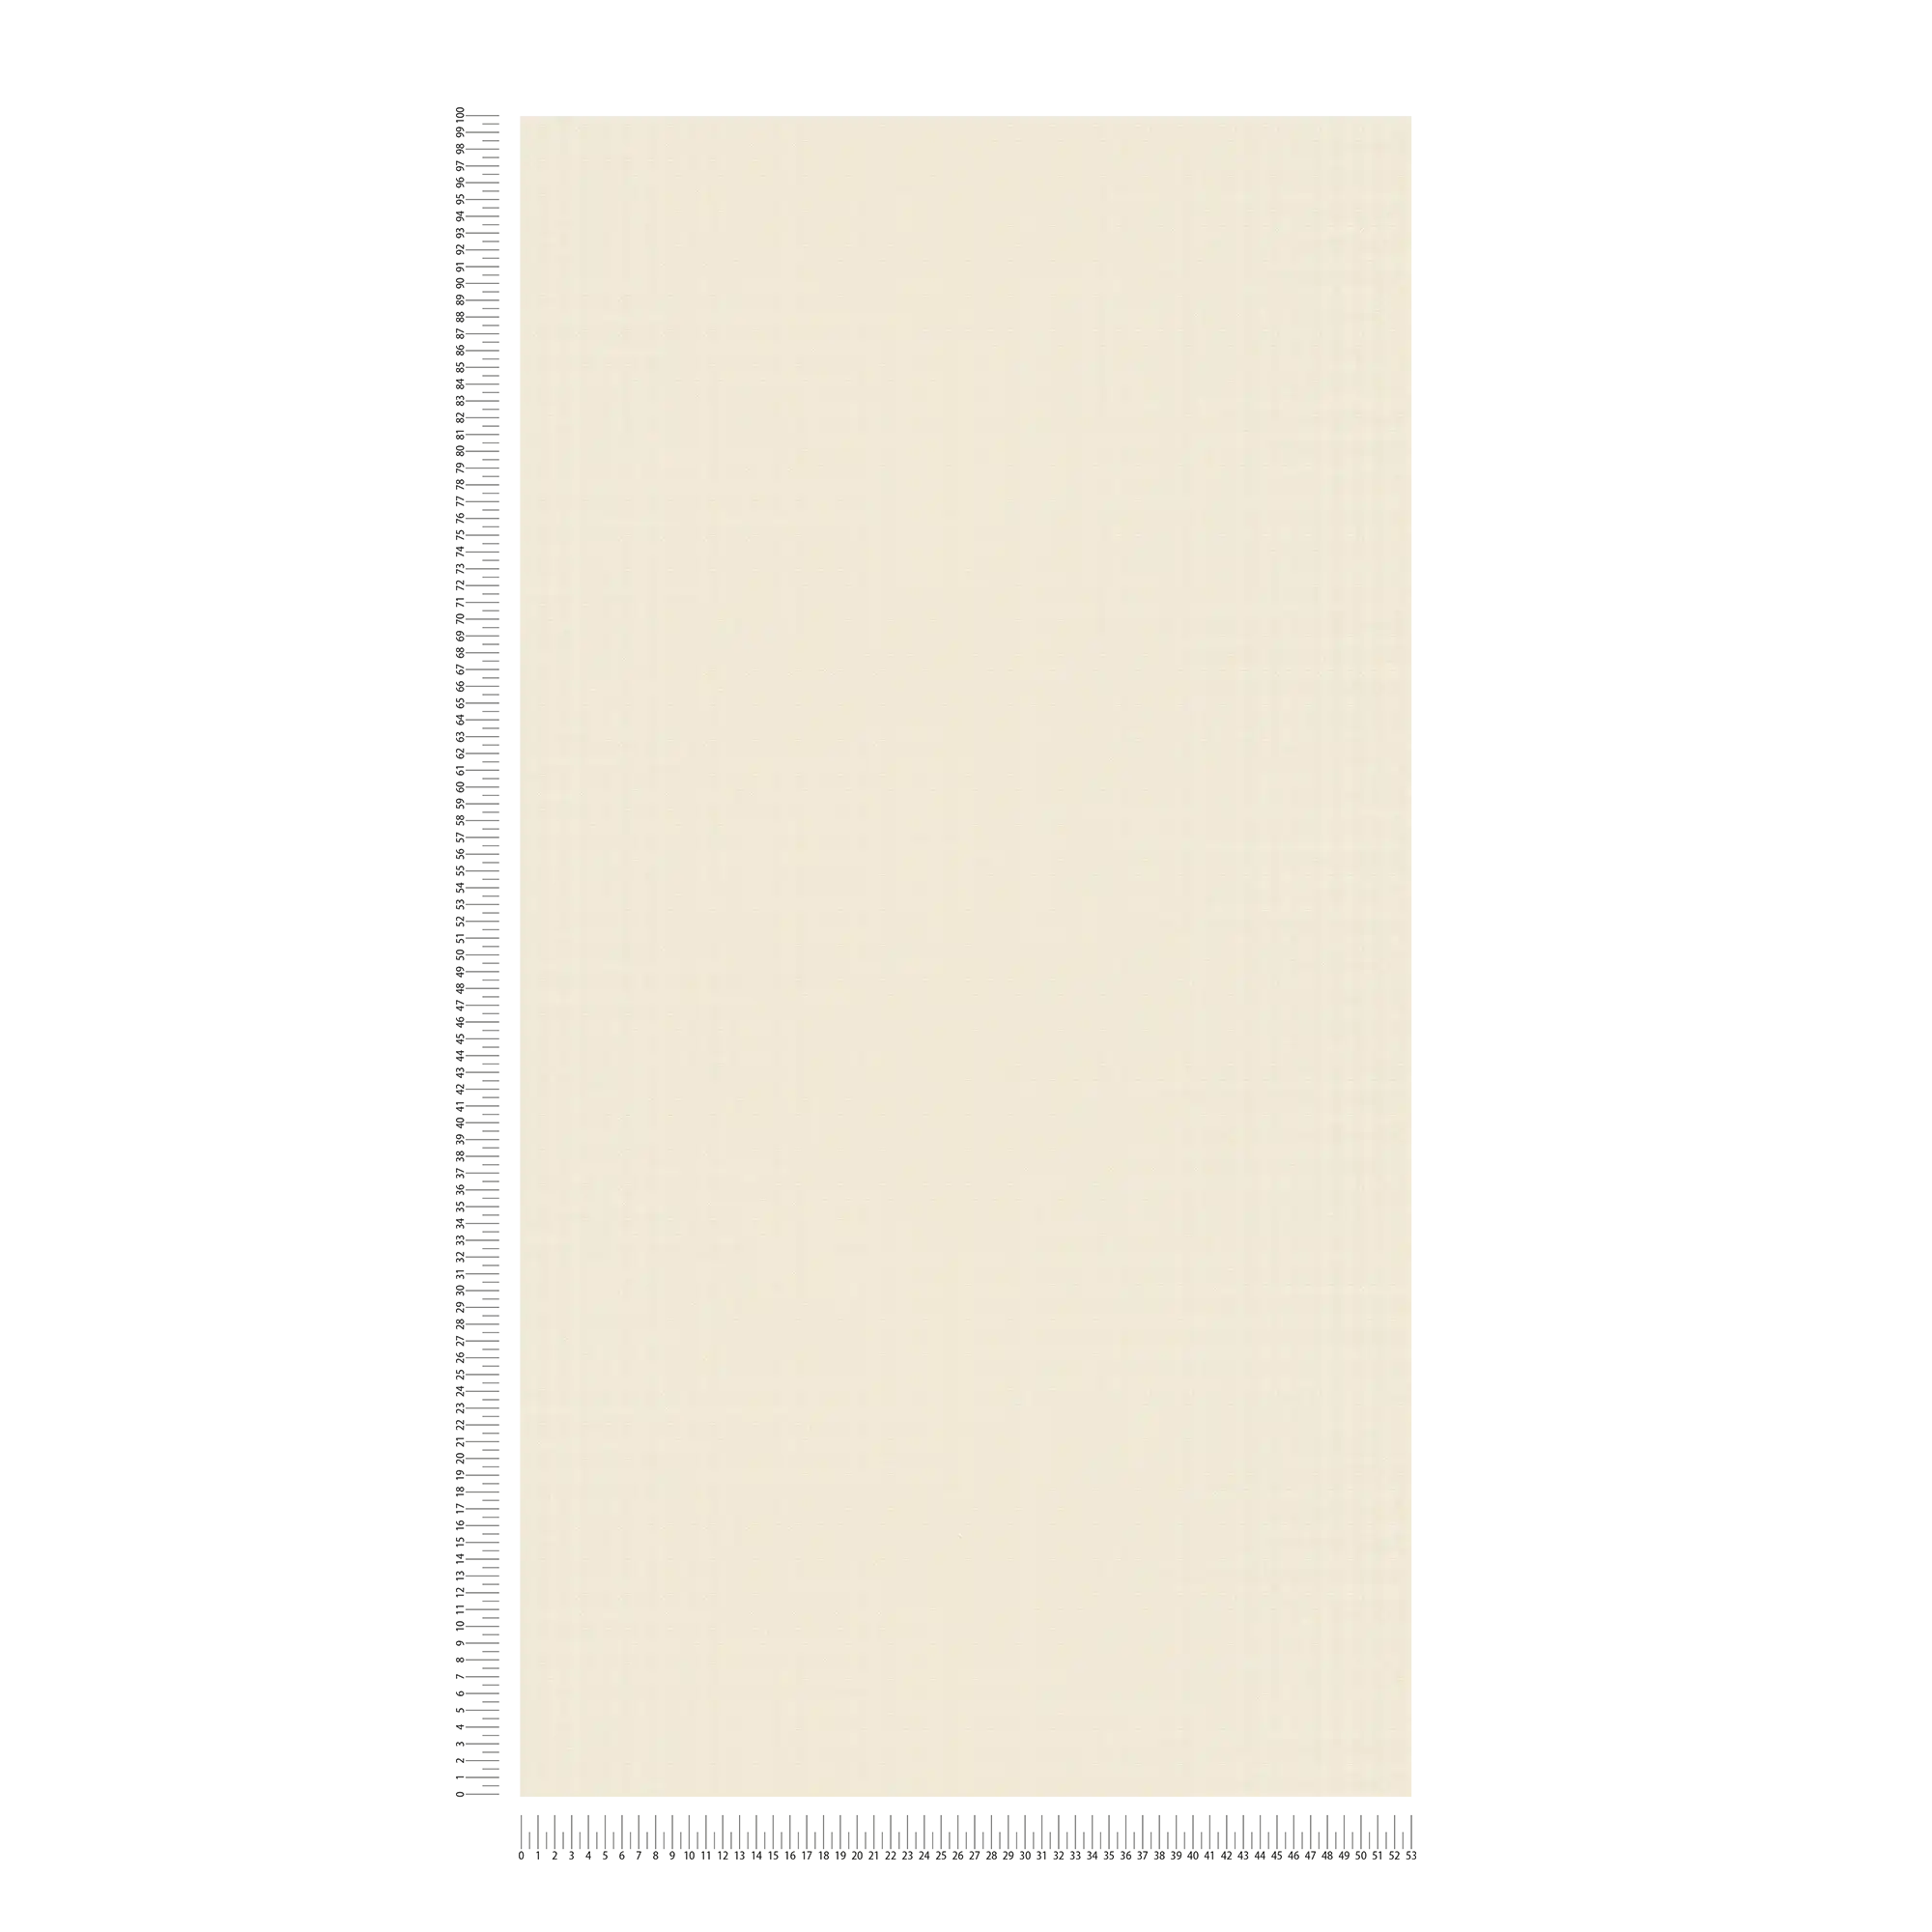             wallpaper Karl LAGERFELD plain with profile pattern - cream
        